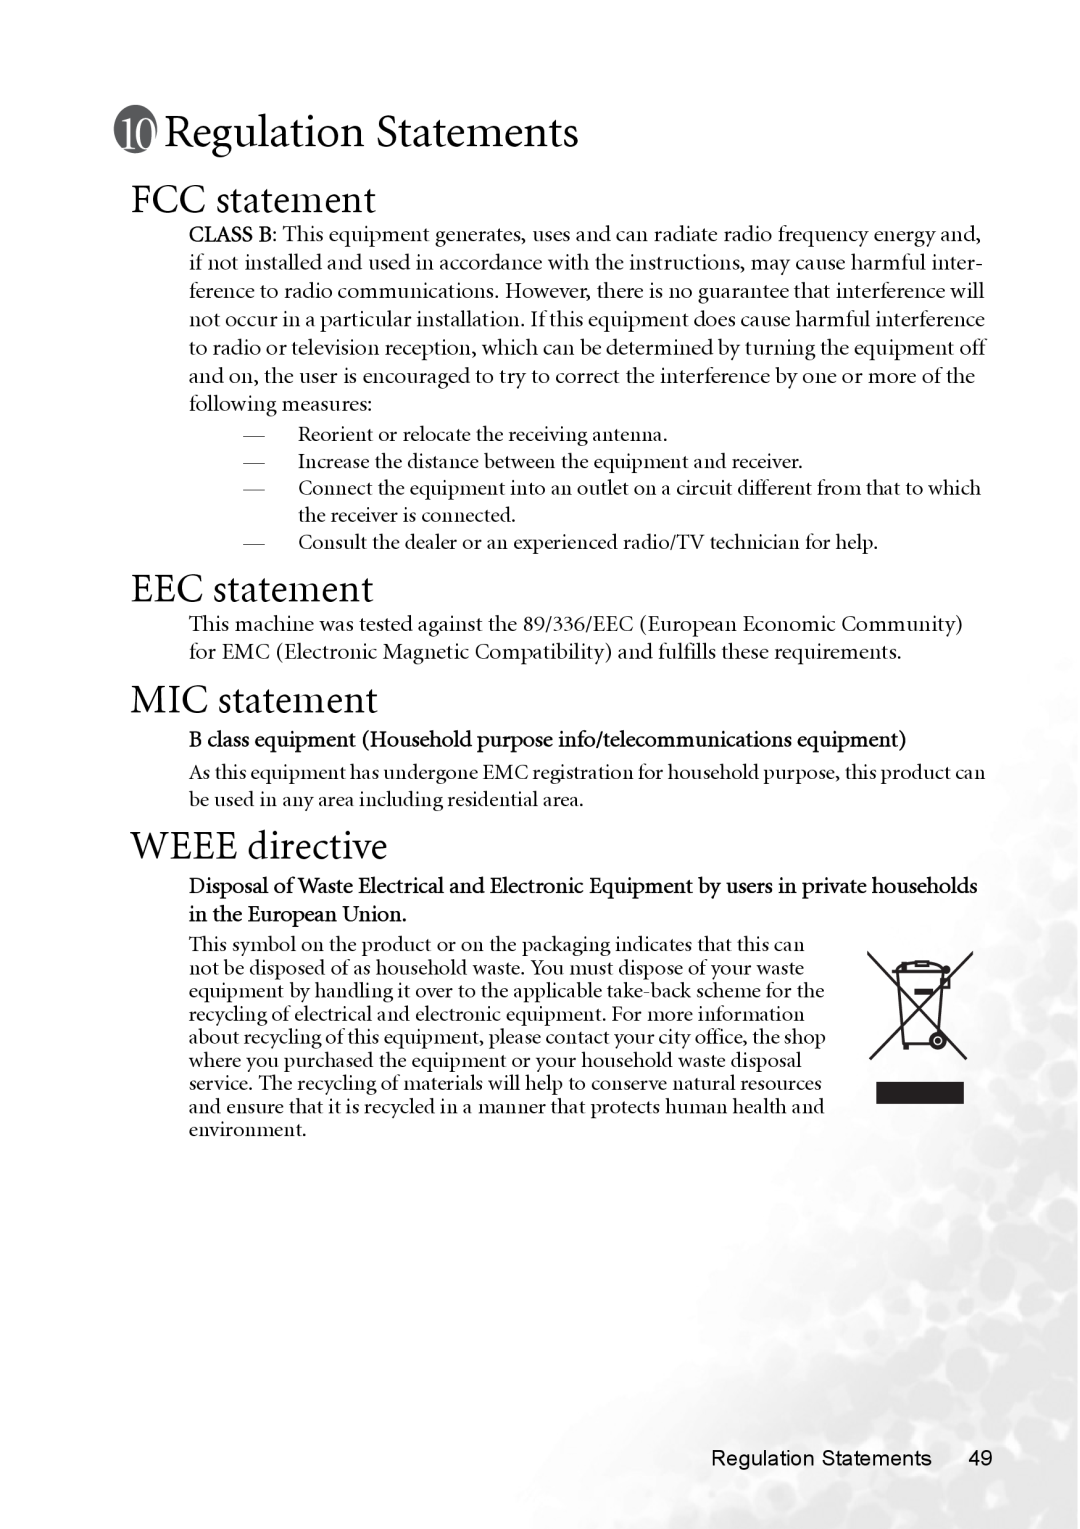 BenQ MP620p user manual Regulation Statements, FCC statement, EEC statement, MIC statement, WEEE directive 